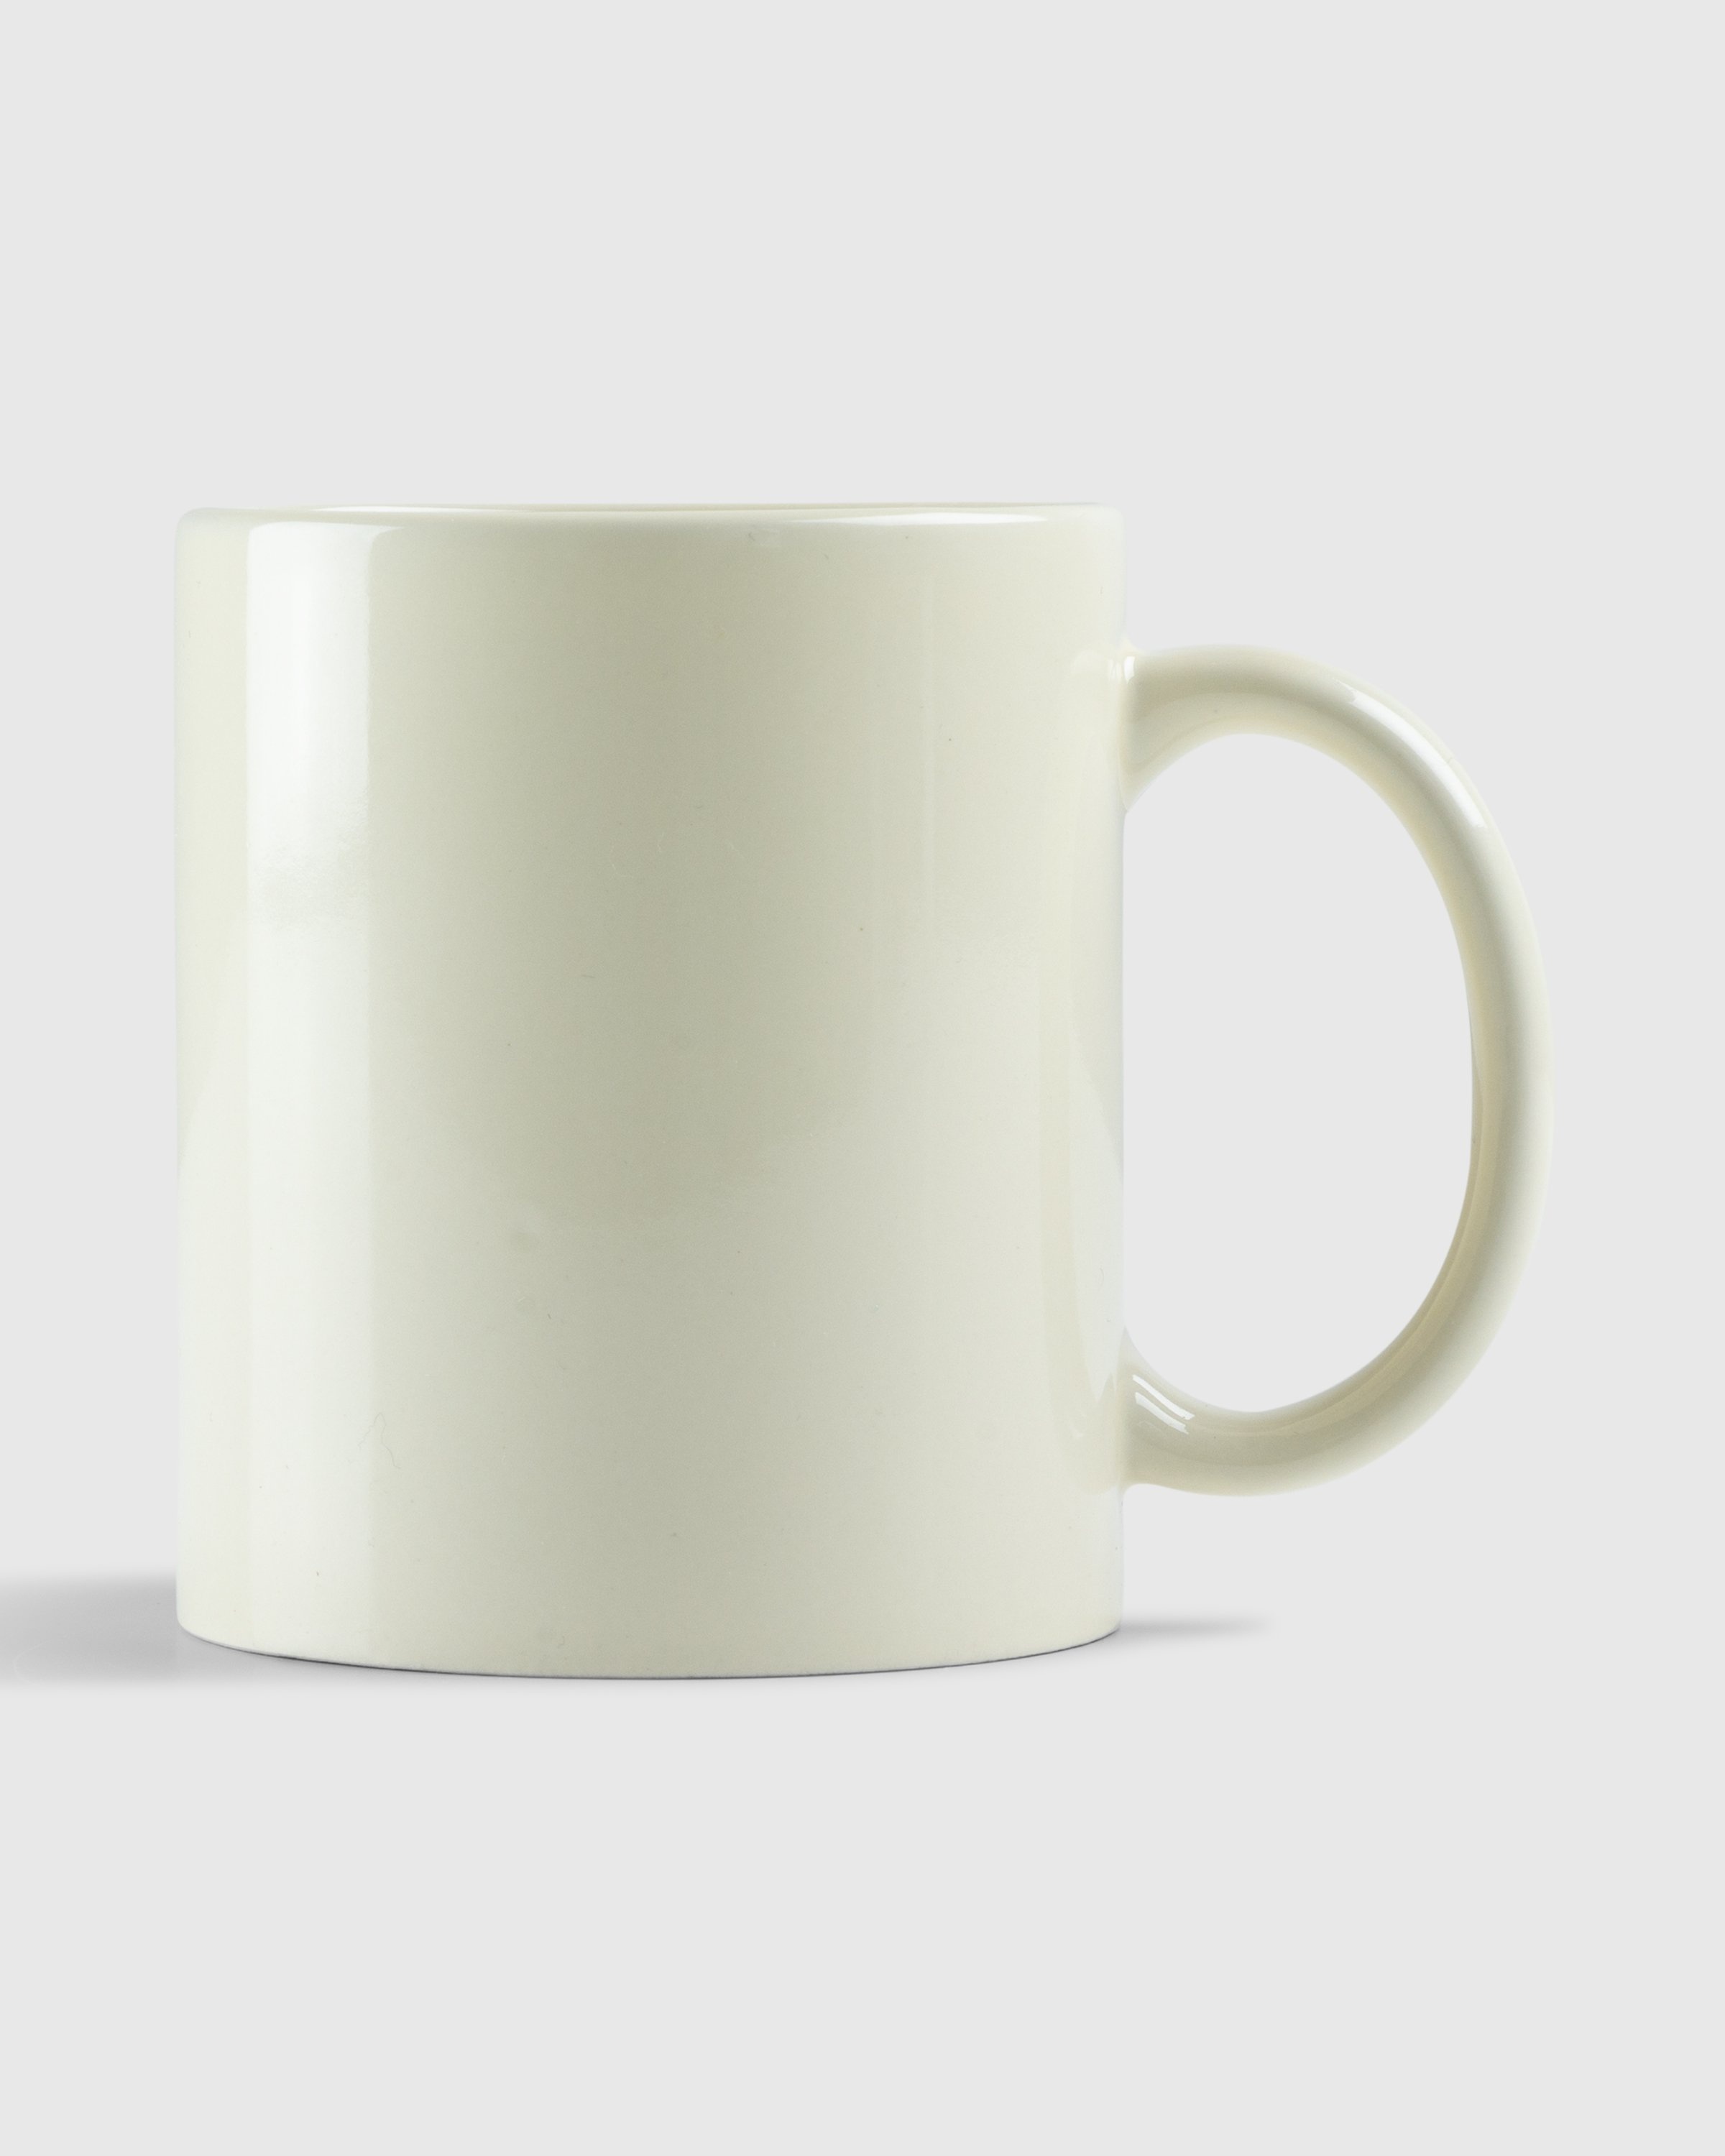 Highsnobiety – Berlin Mug - Ceramics - White - Image 2